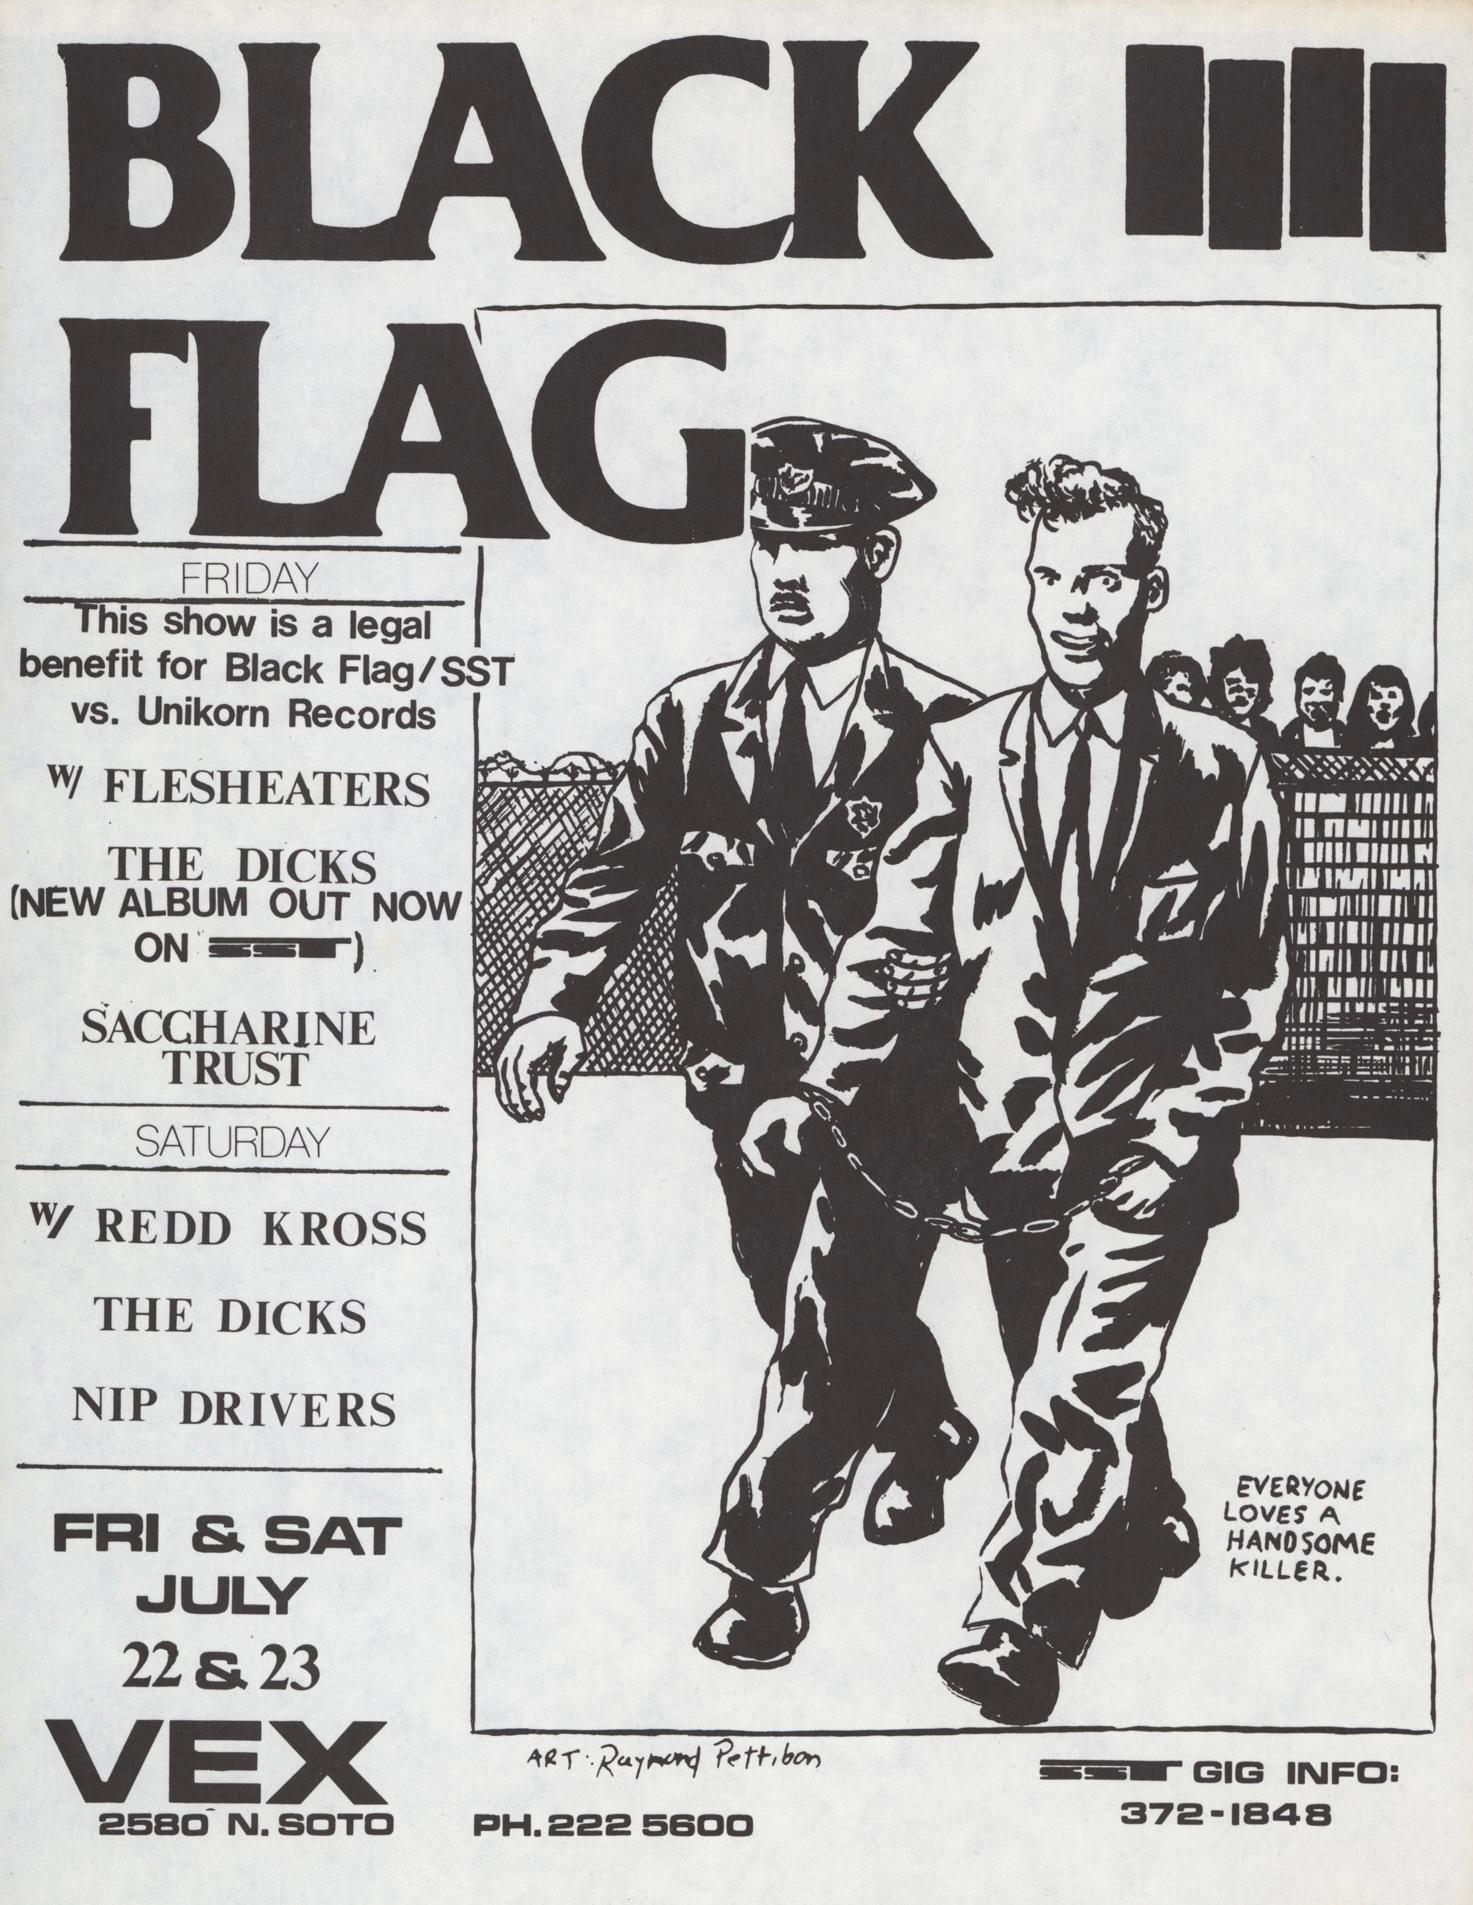 Raymond Pettibon: Black Flag at Vex 1983:
Handbill/ punk flyer for gig by Black Flag, Flesheaters, The Dicks, Saccharine Trust, Redd Kross, The Dicks, & Nip Drivers featuring artwork by Pettibon. Pettibon text reads: 